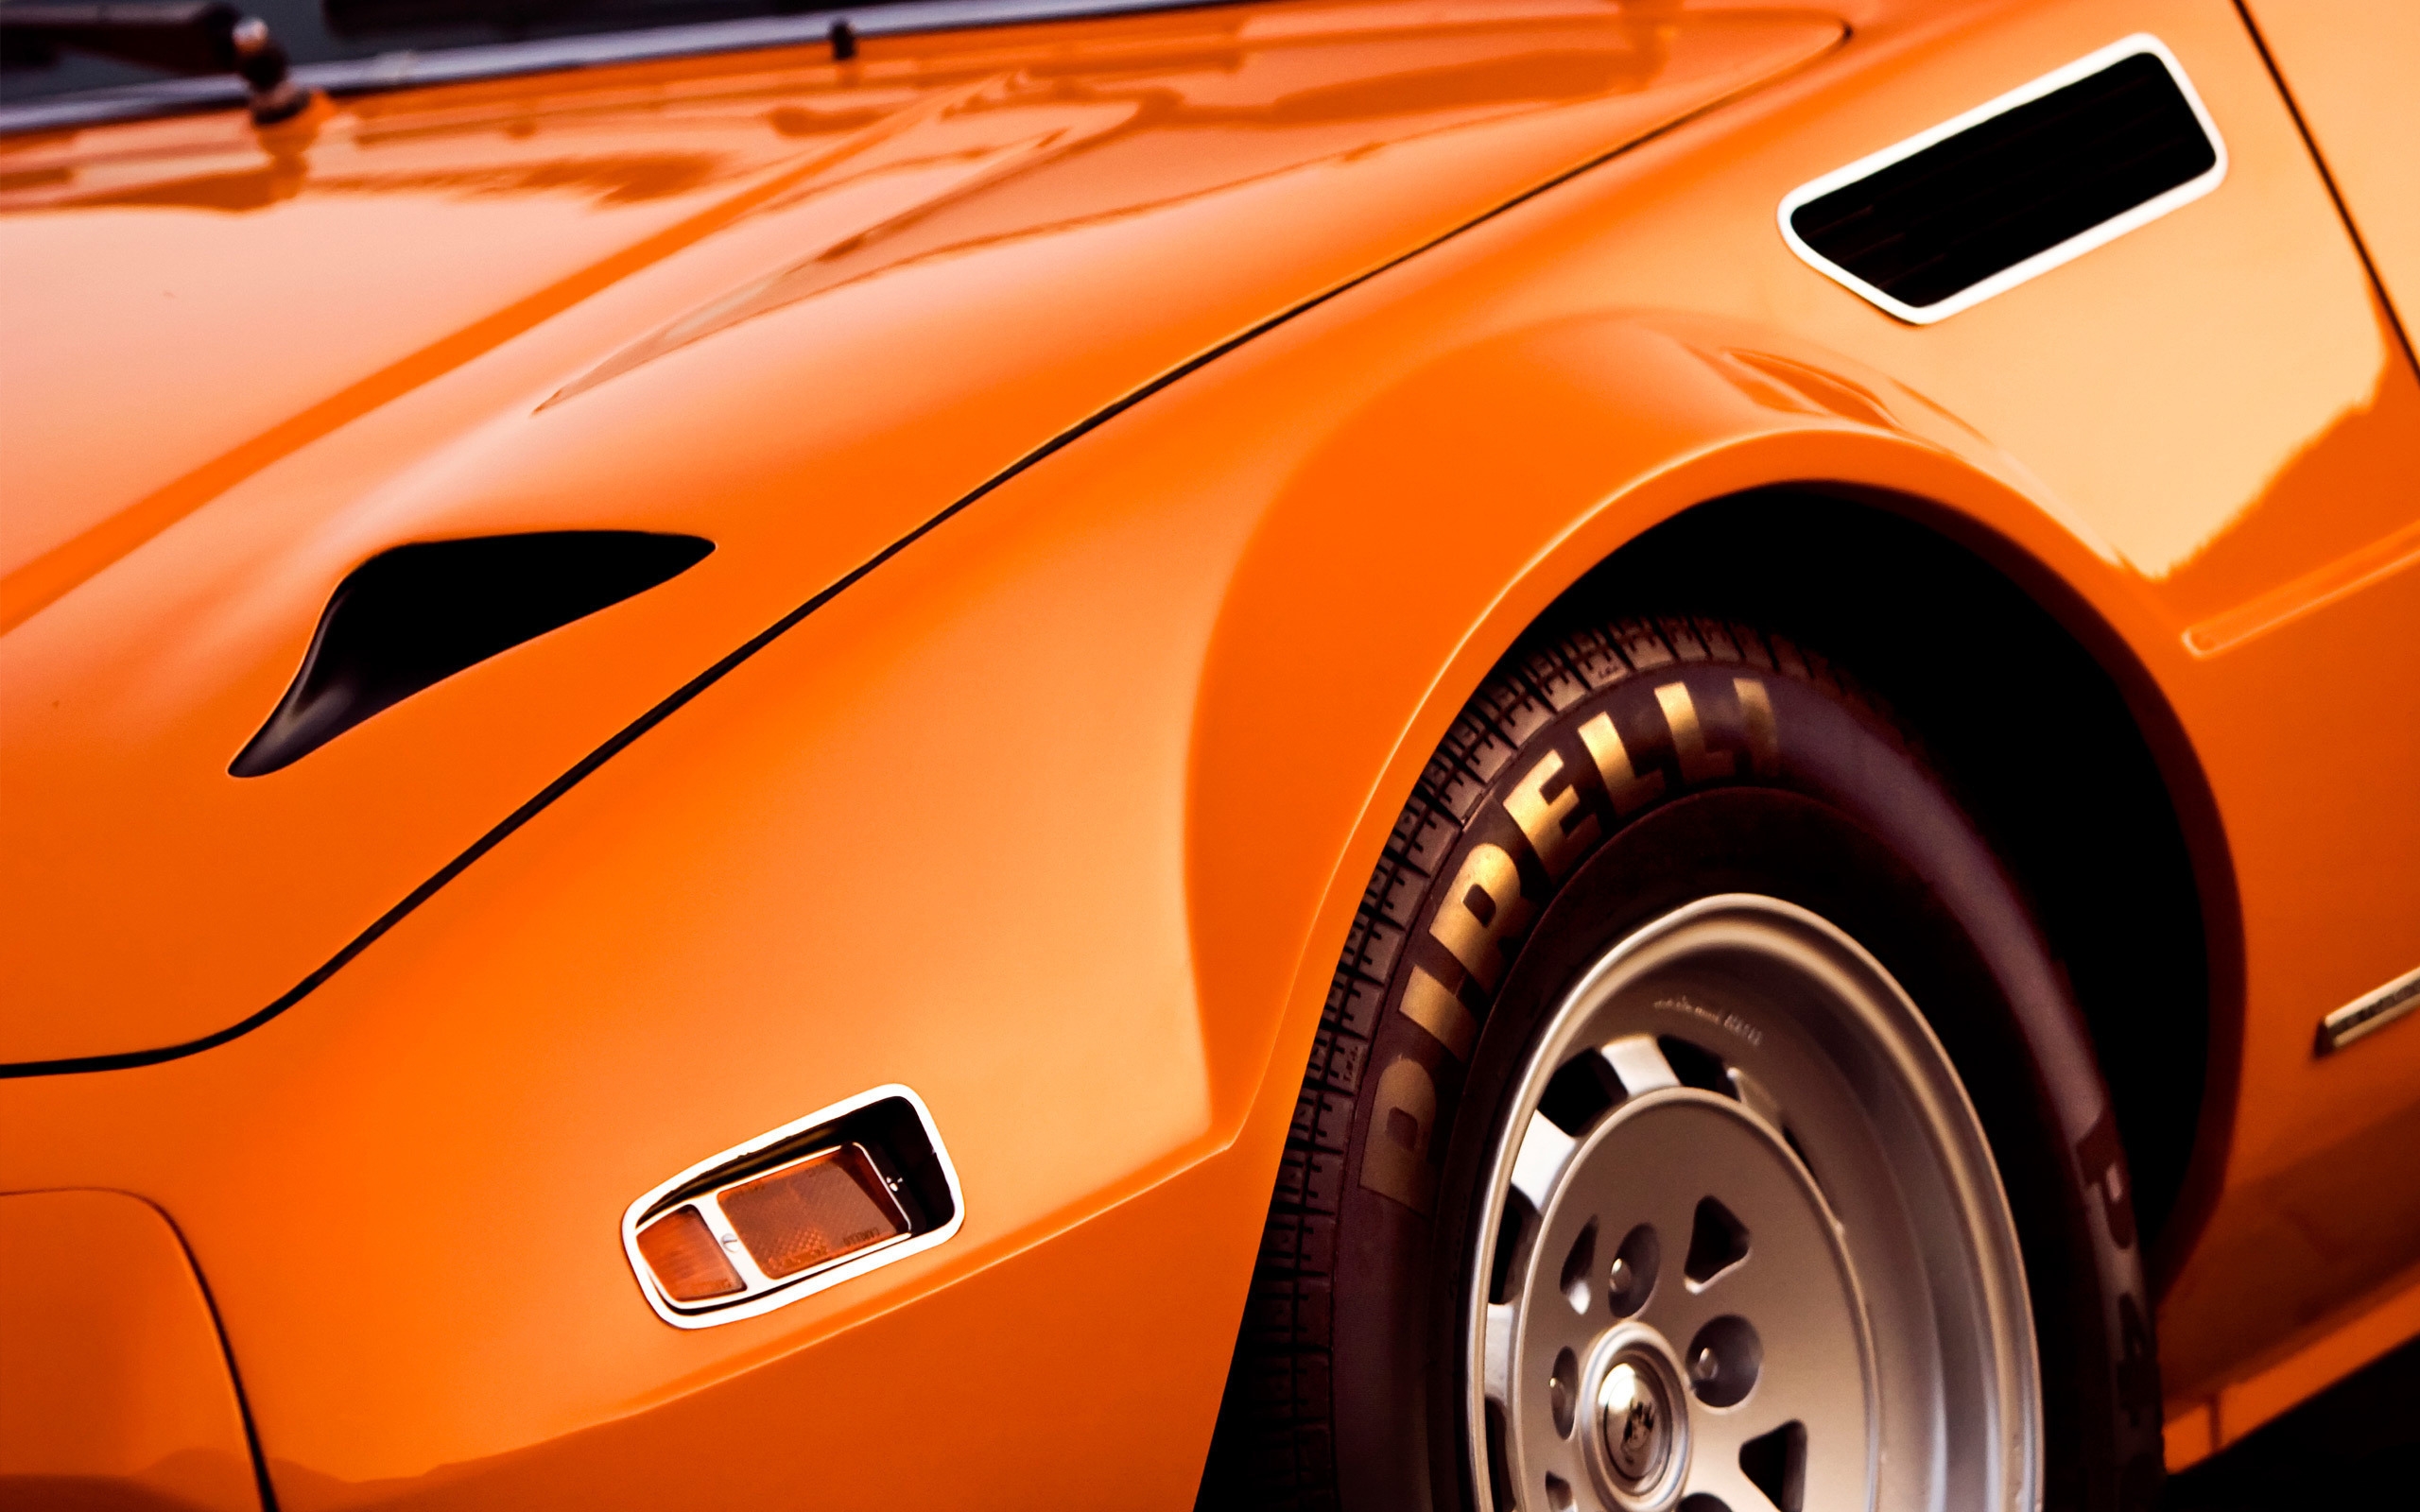 Wallpaper, 2560x1600 px, car, muscle cars, orange cars 2560x1600